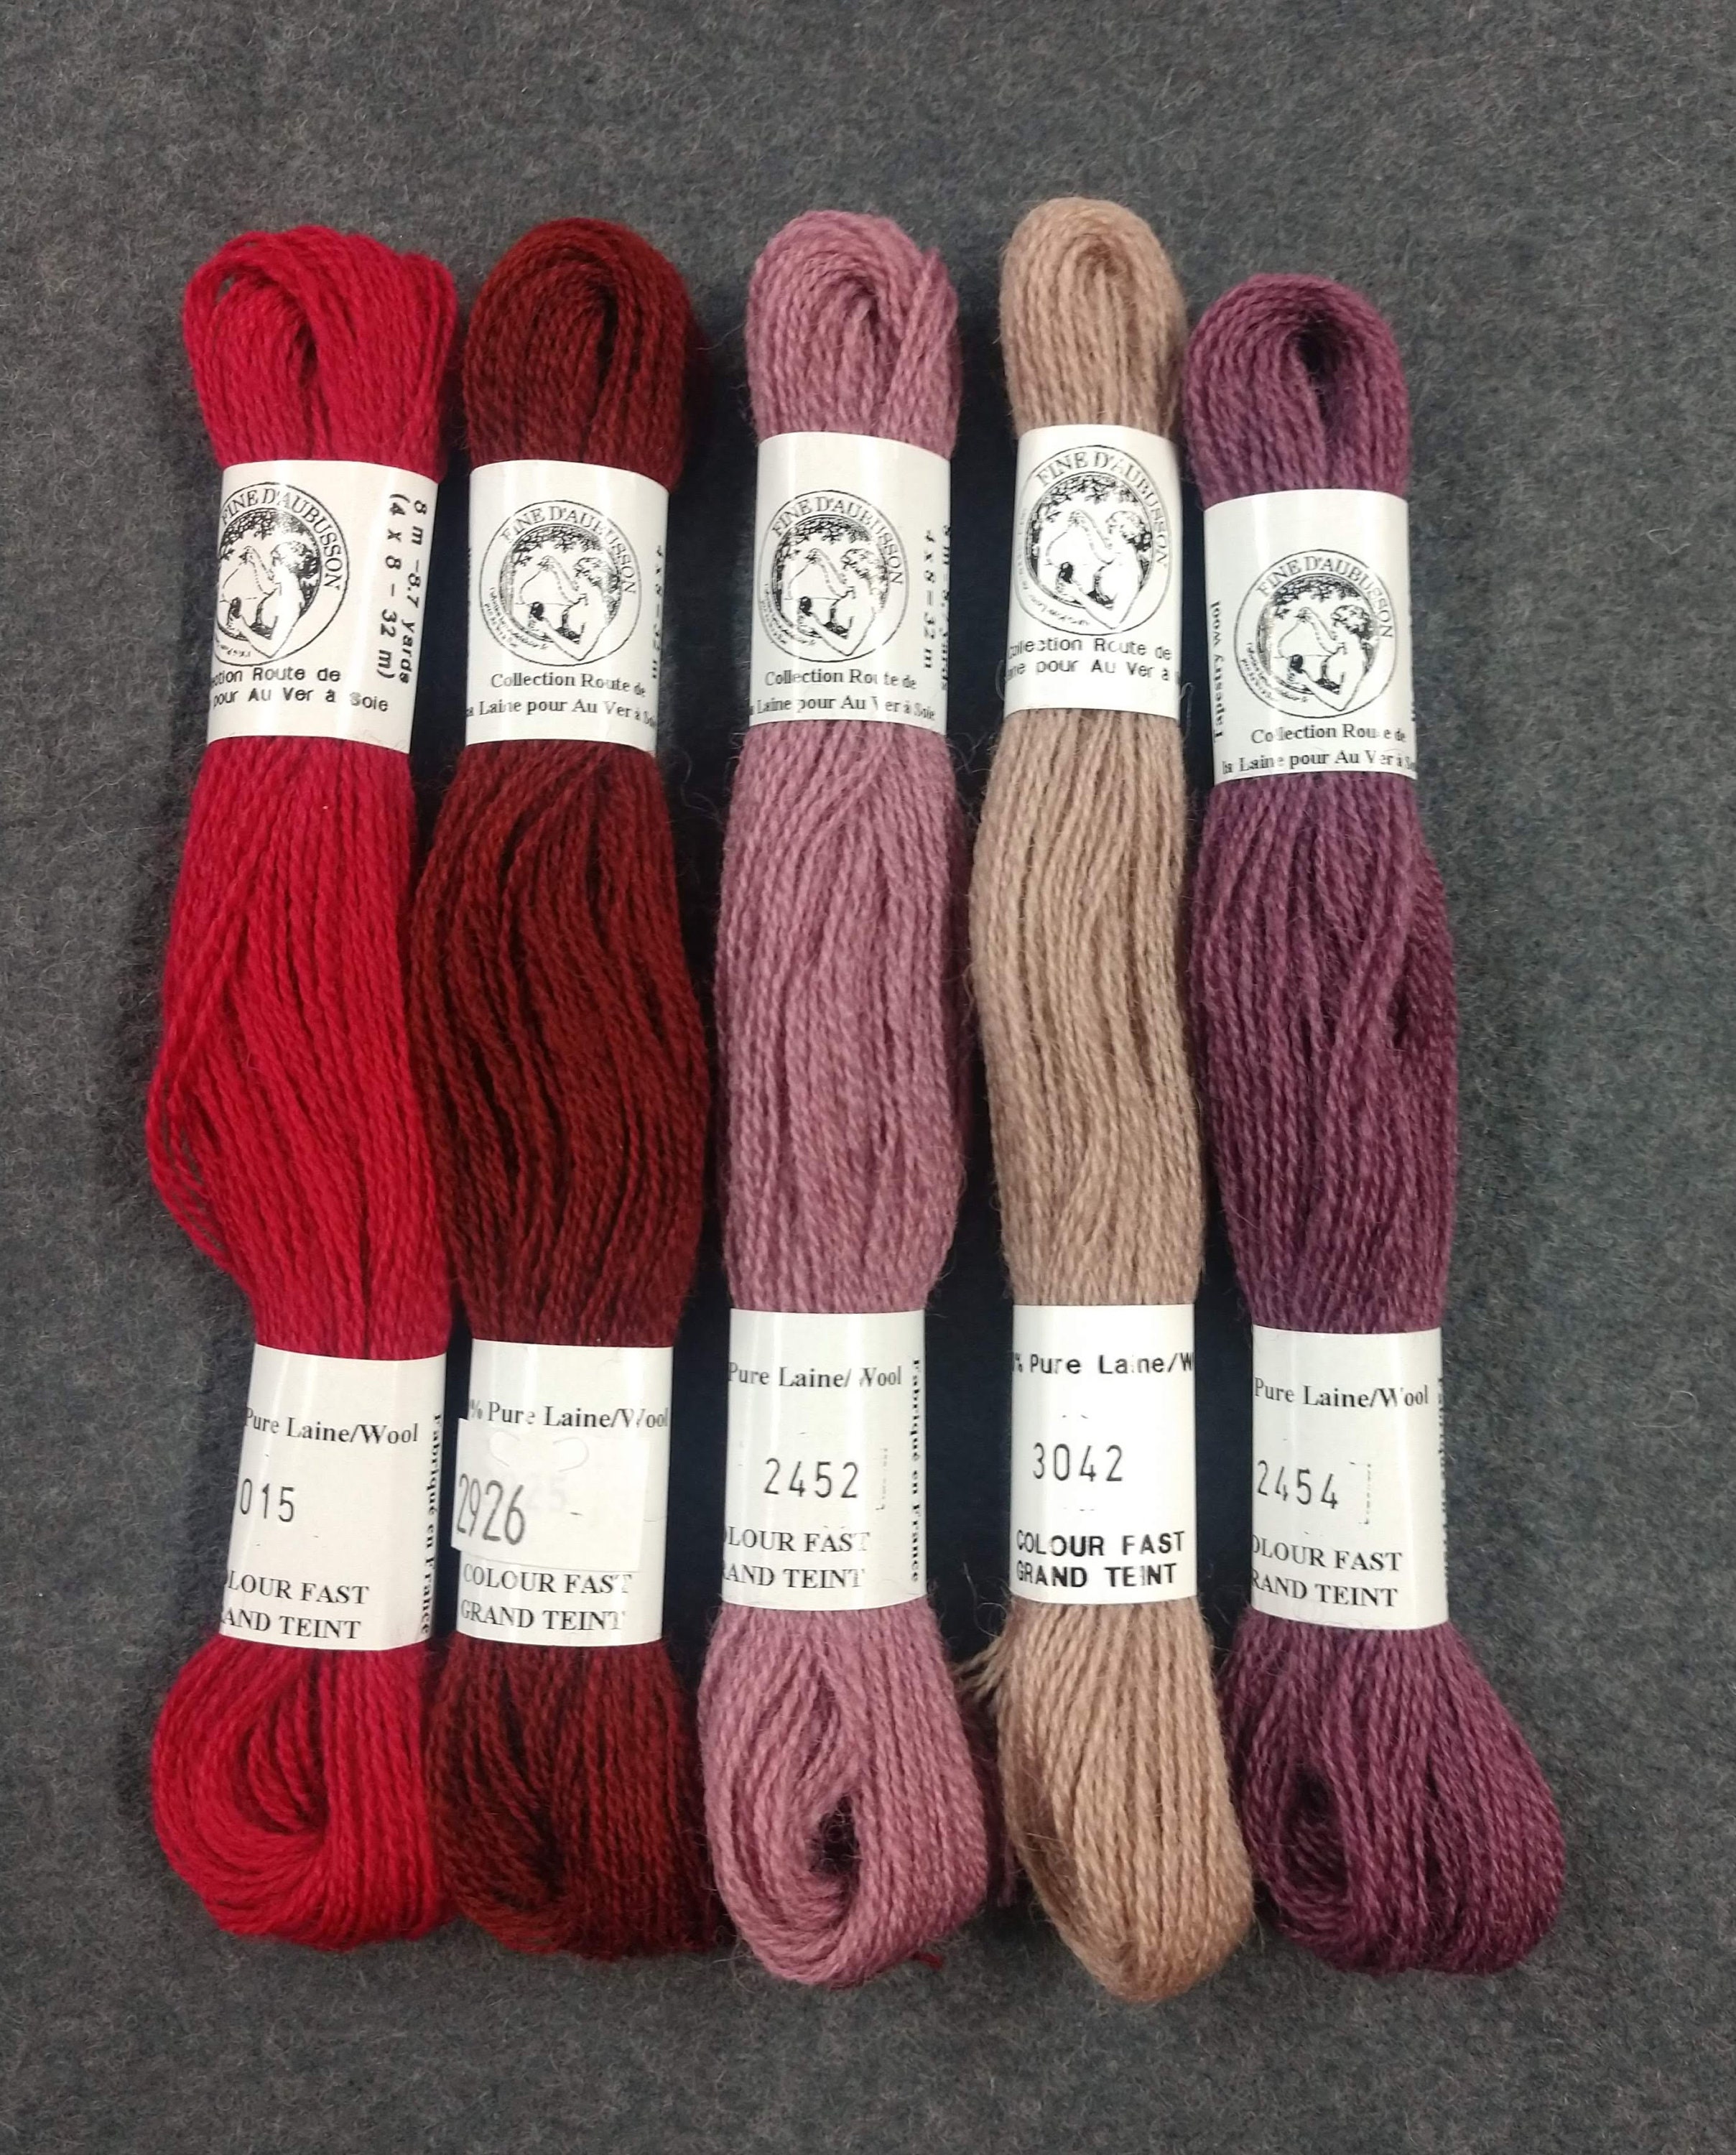 Knitpro Sewing up Wool / Tapestry Needles Plastic Loop Eye 3 Sizes Easy  Thread 